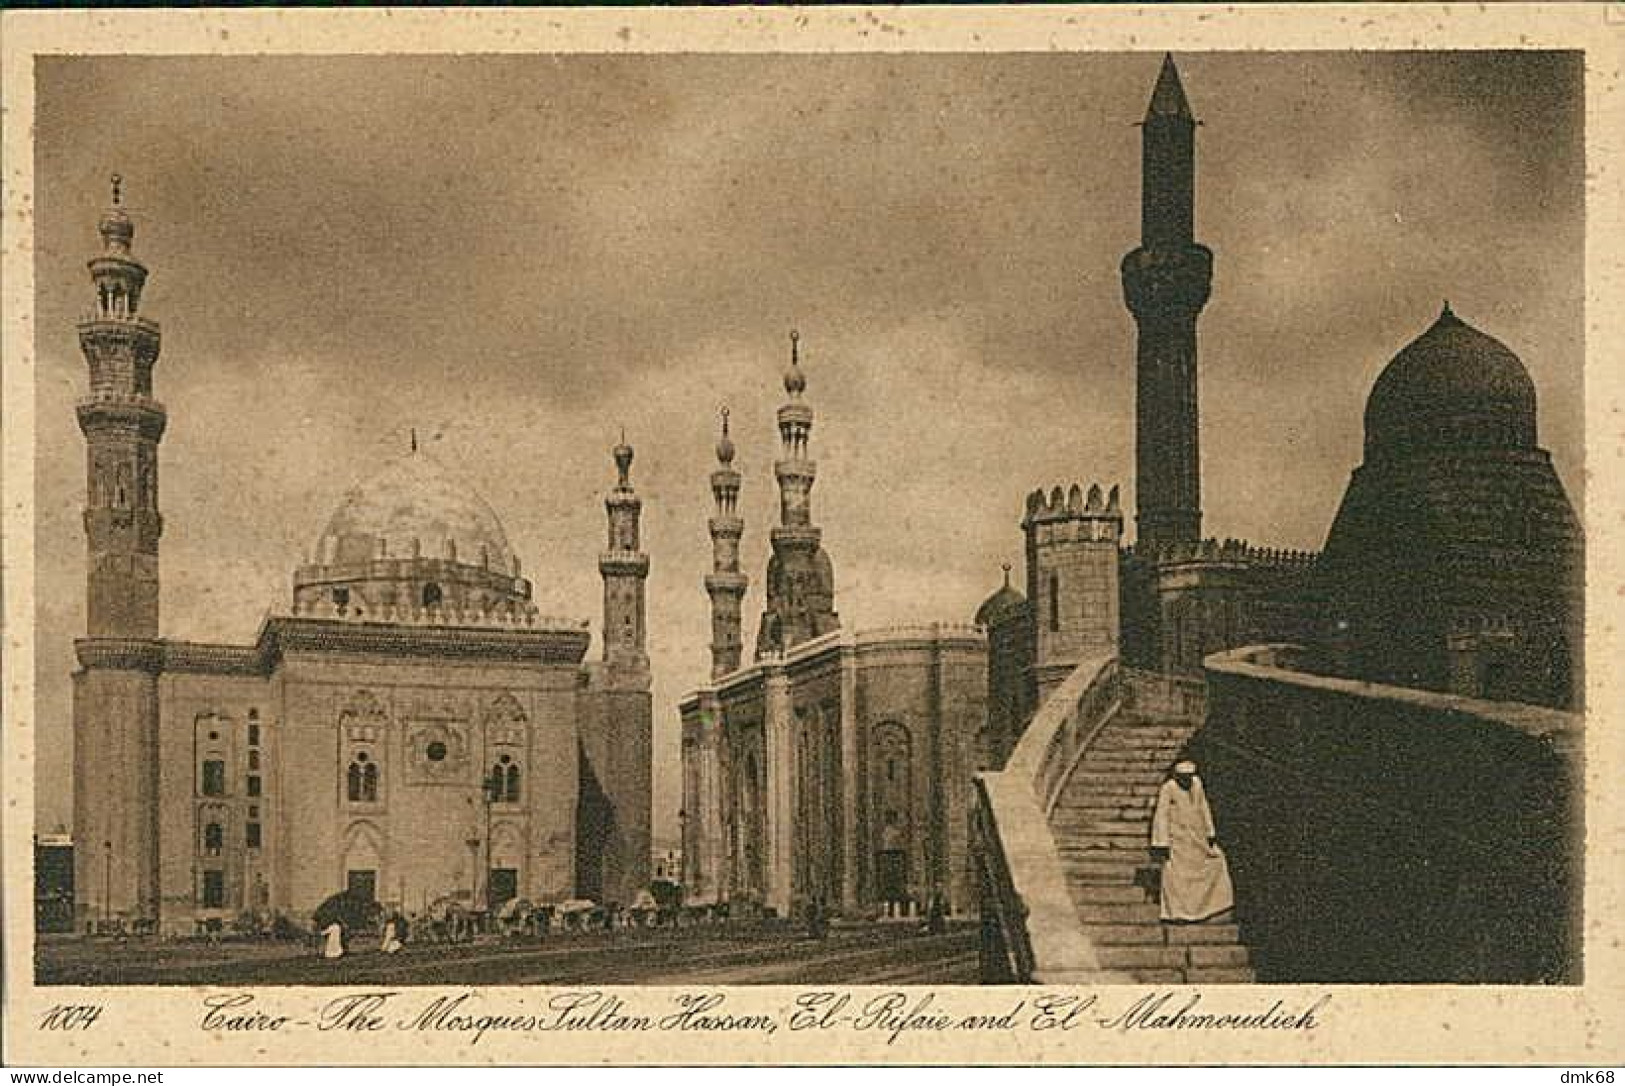 EGYPT - CAIRO - THE MOSQUES SULTAN HASSAN - EL RIFAI & EL- MAHMOUDIEH (1004) EDIT. LEHNERT & LANDROCK 1920s (12663) - Kairo